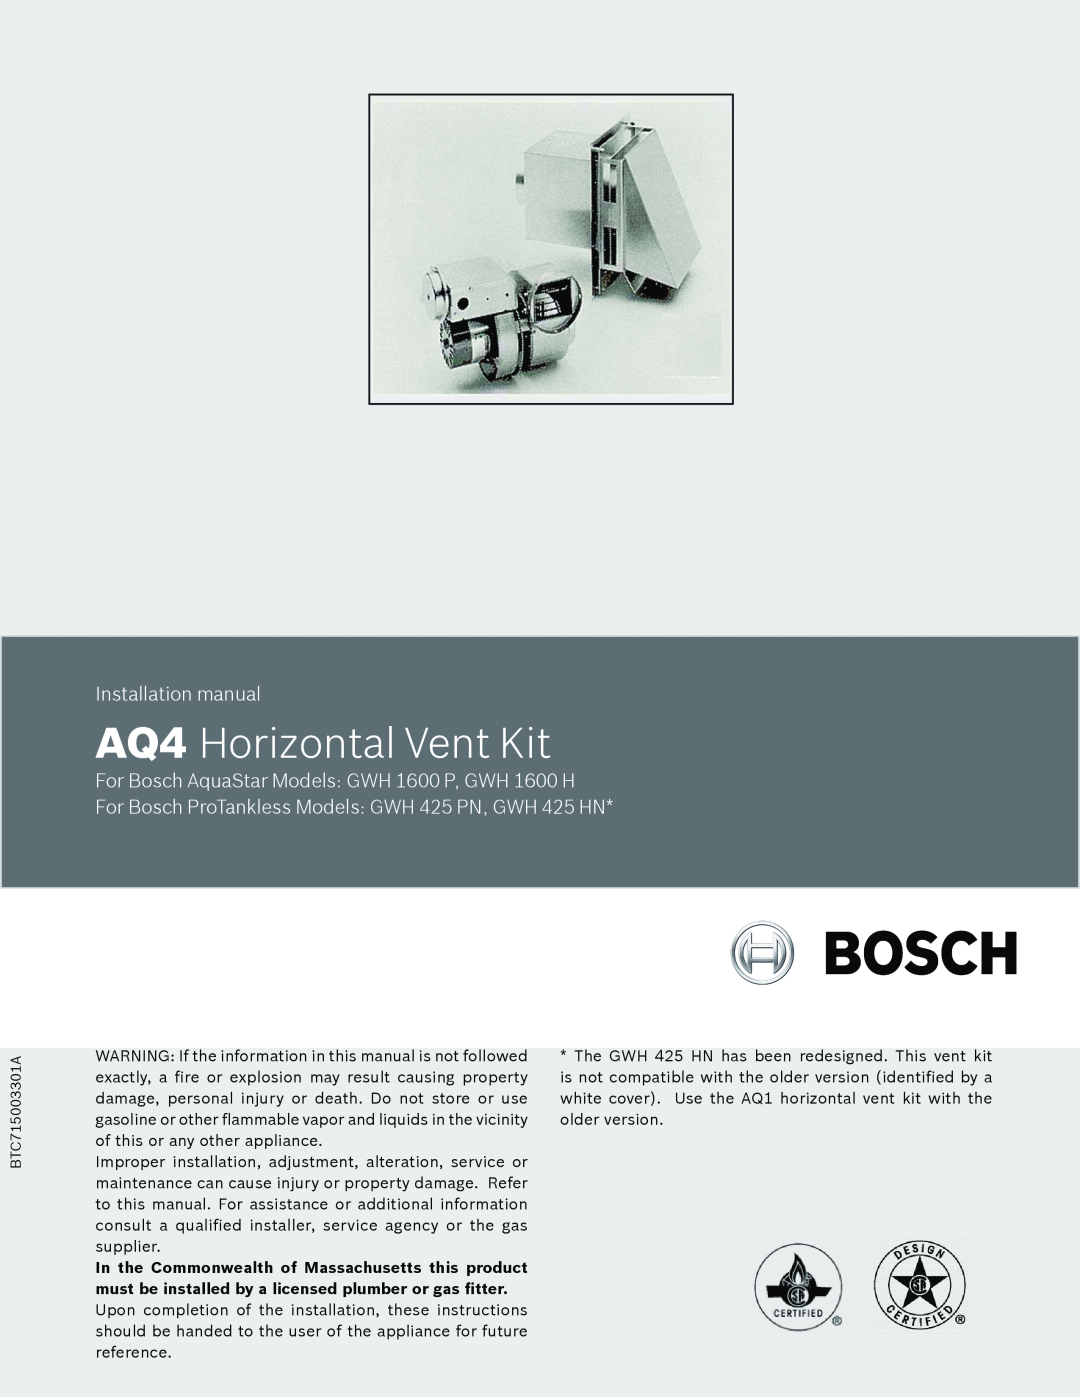 AquaStar installation manual AQ4 Horizontal Vent Kit, Installation manual 